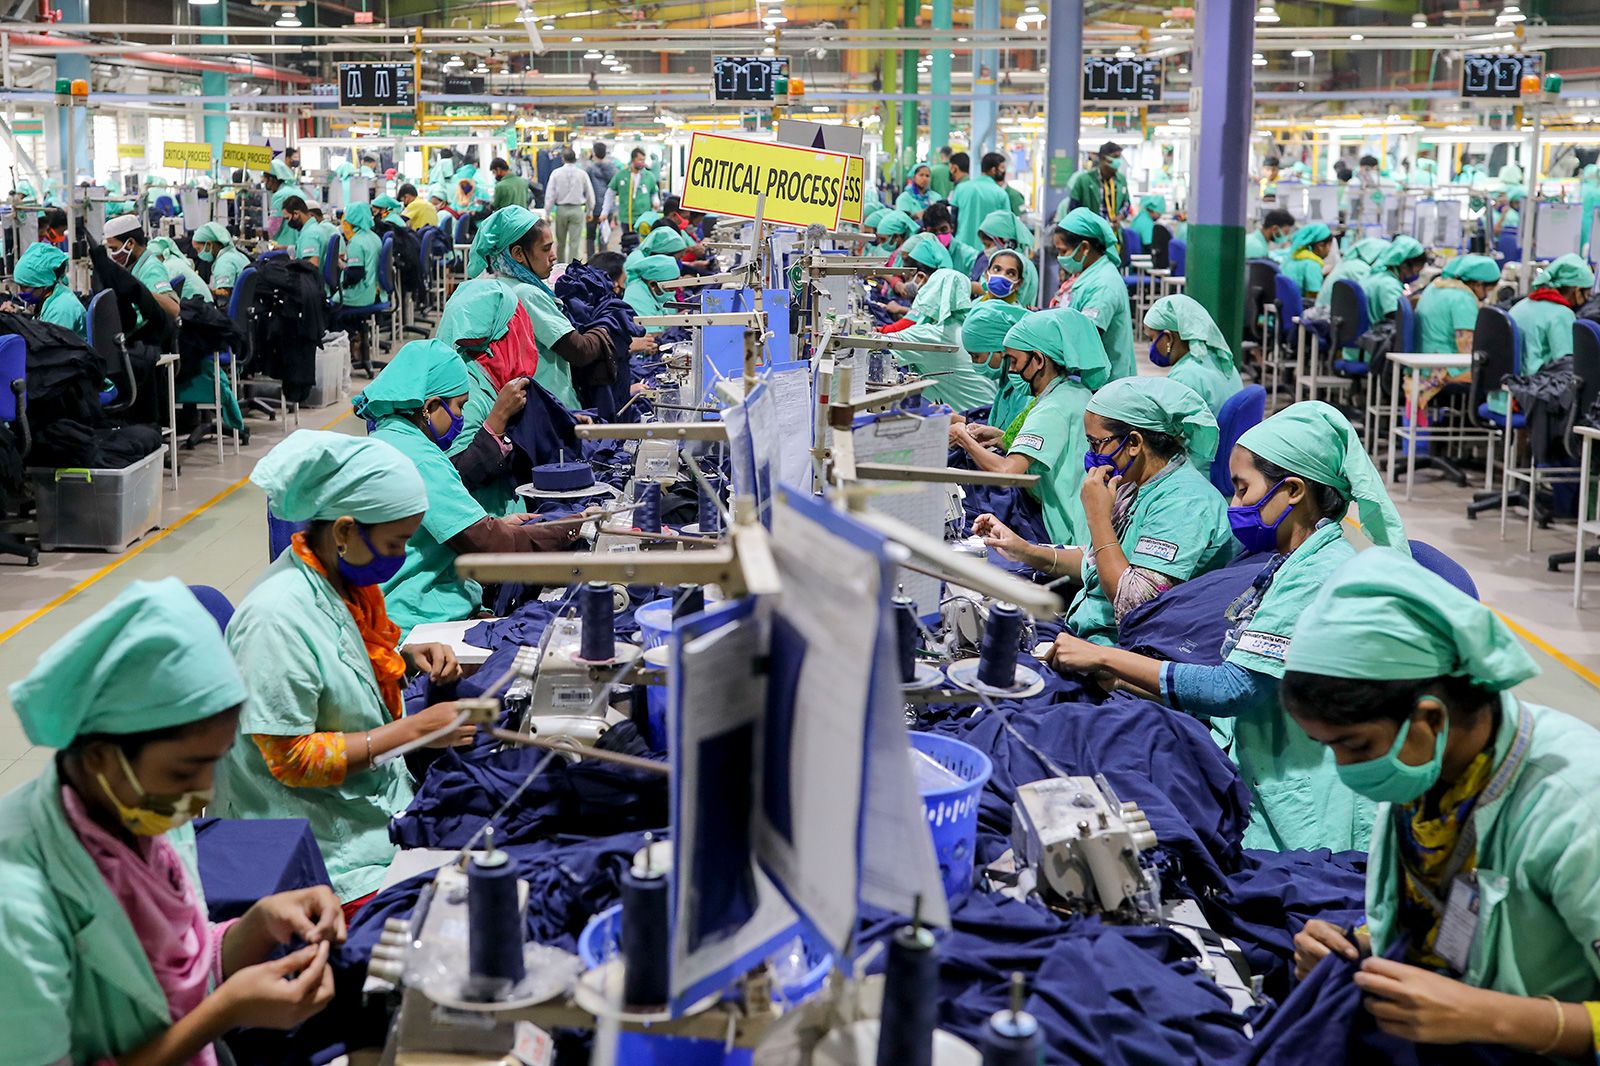 10 years after Rana Plaza, is Bangladesh's garment industry any